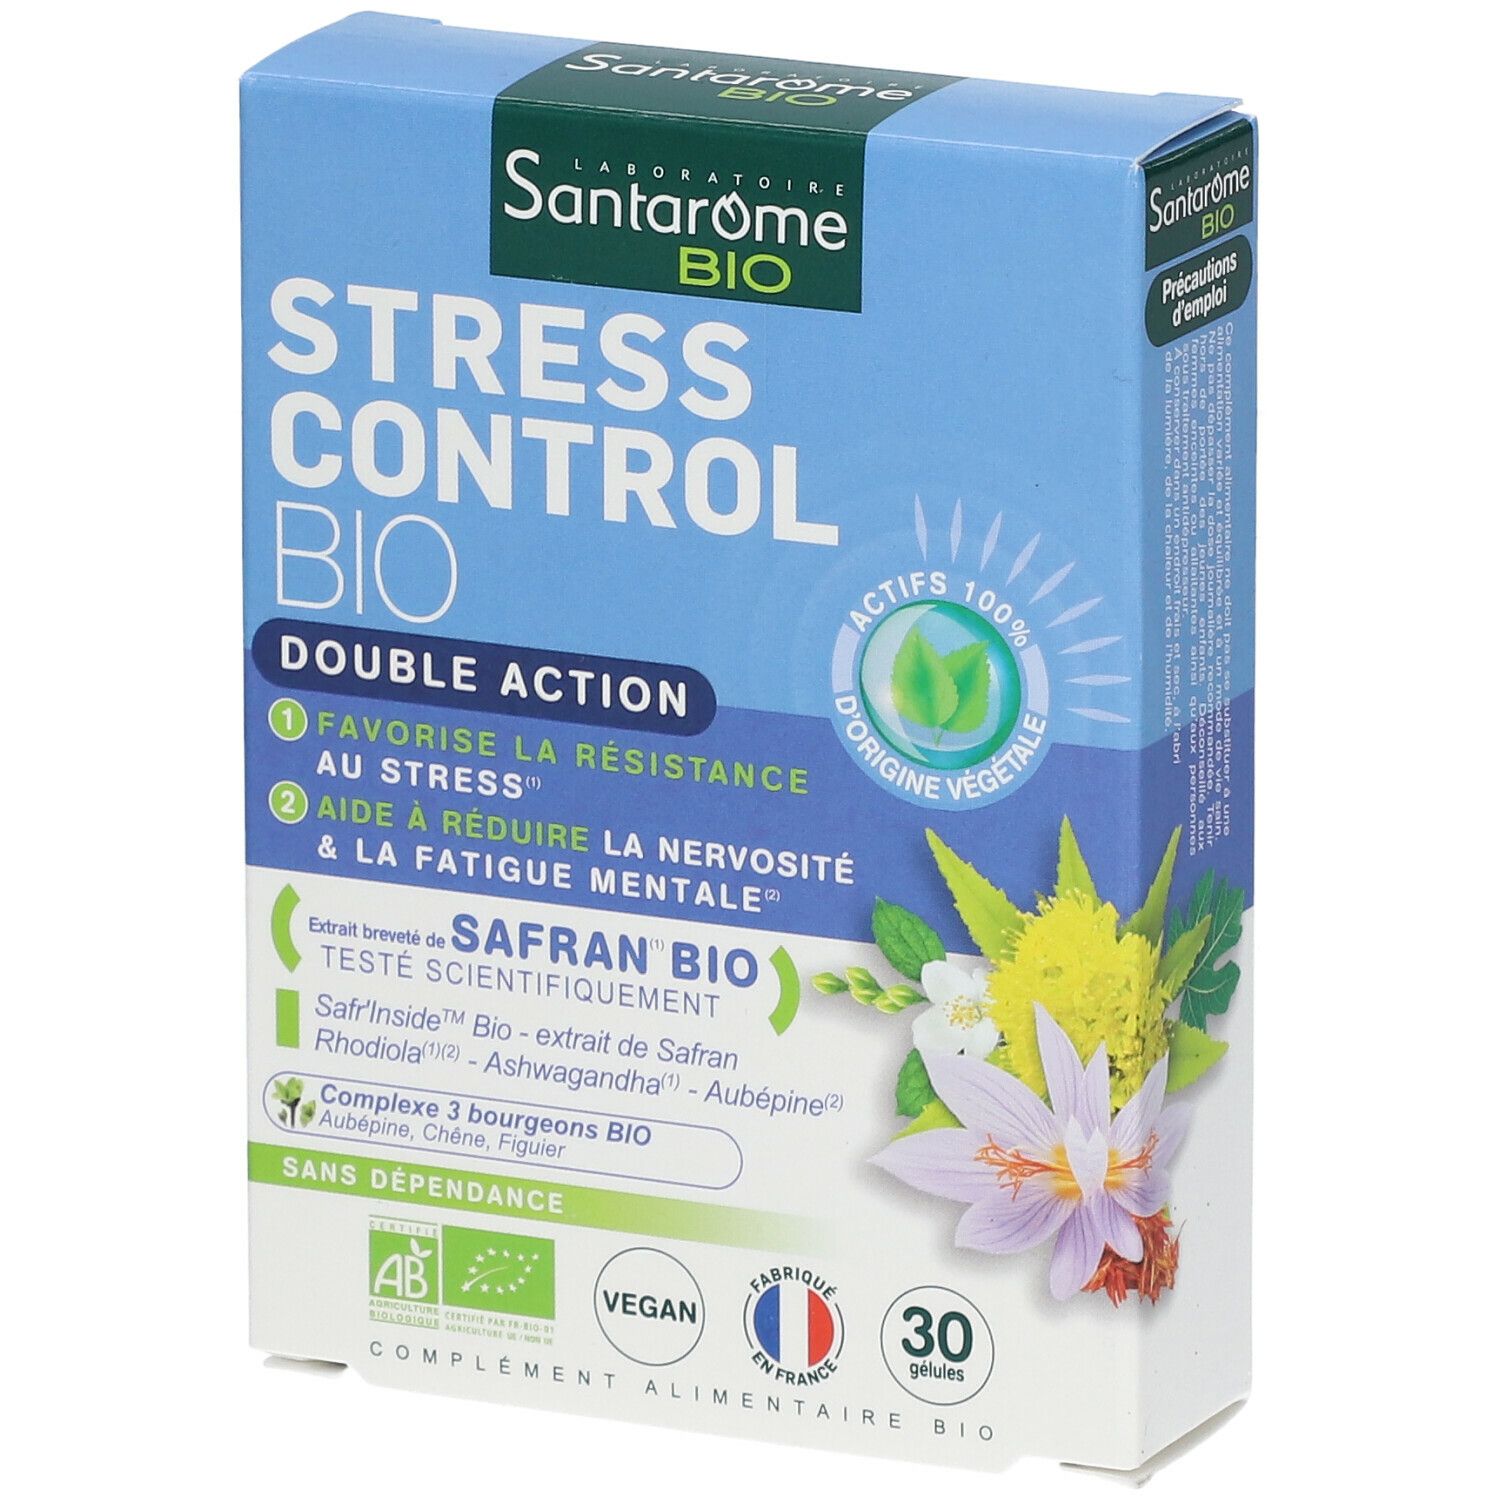 Santarome Bio Stress Control Bio